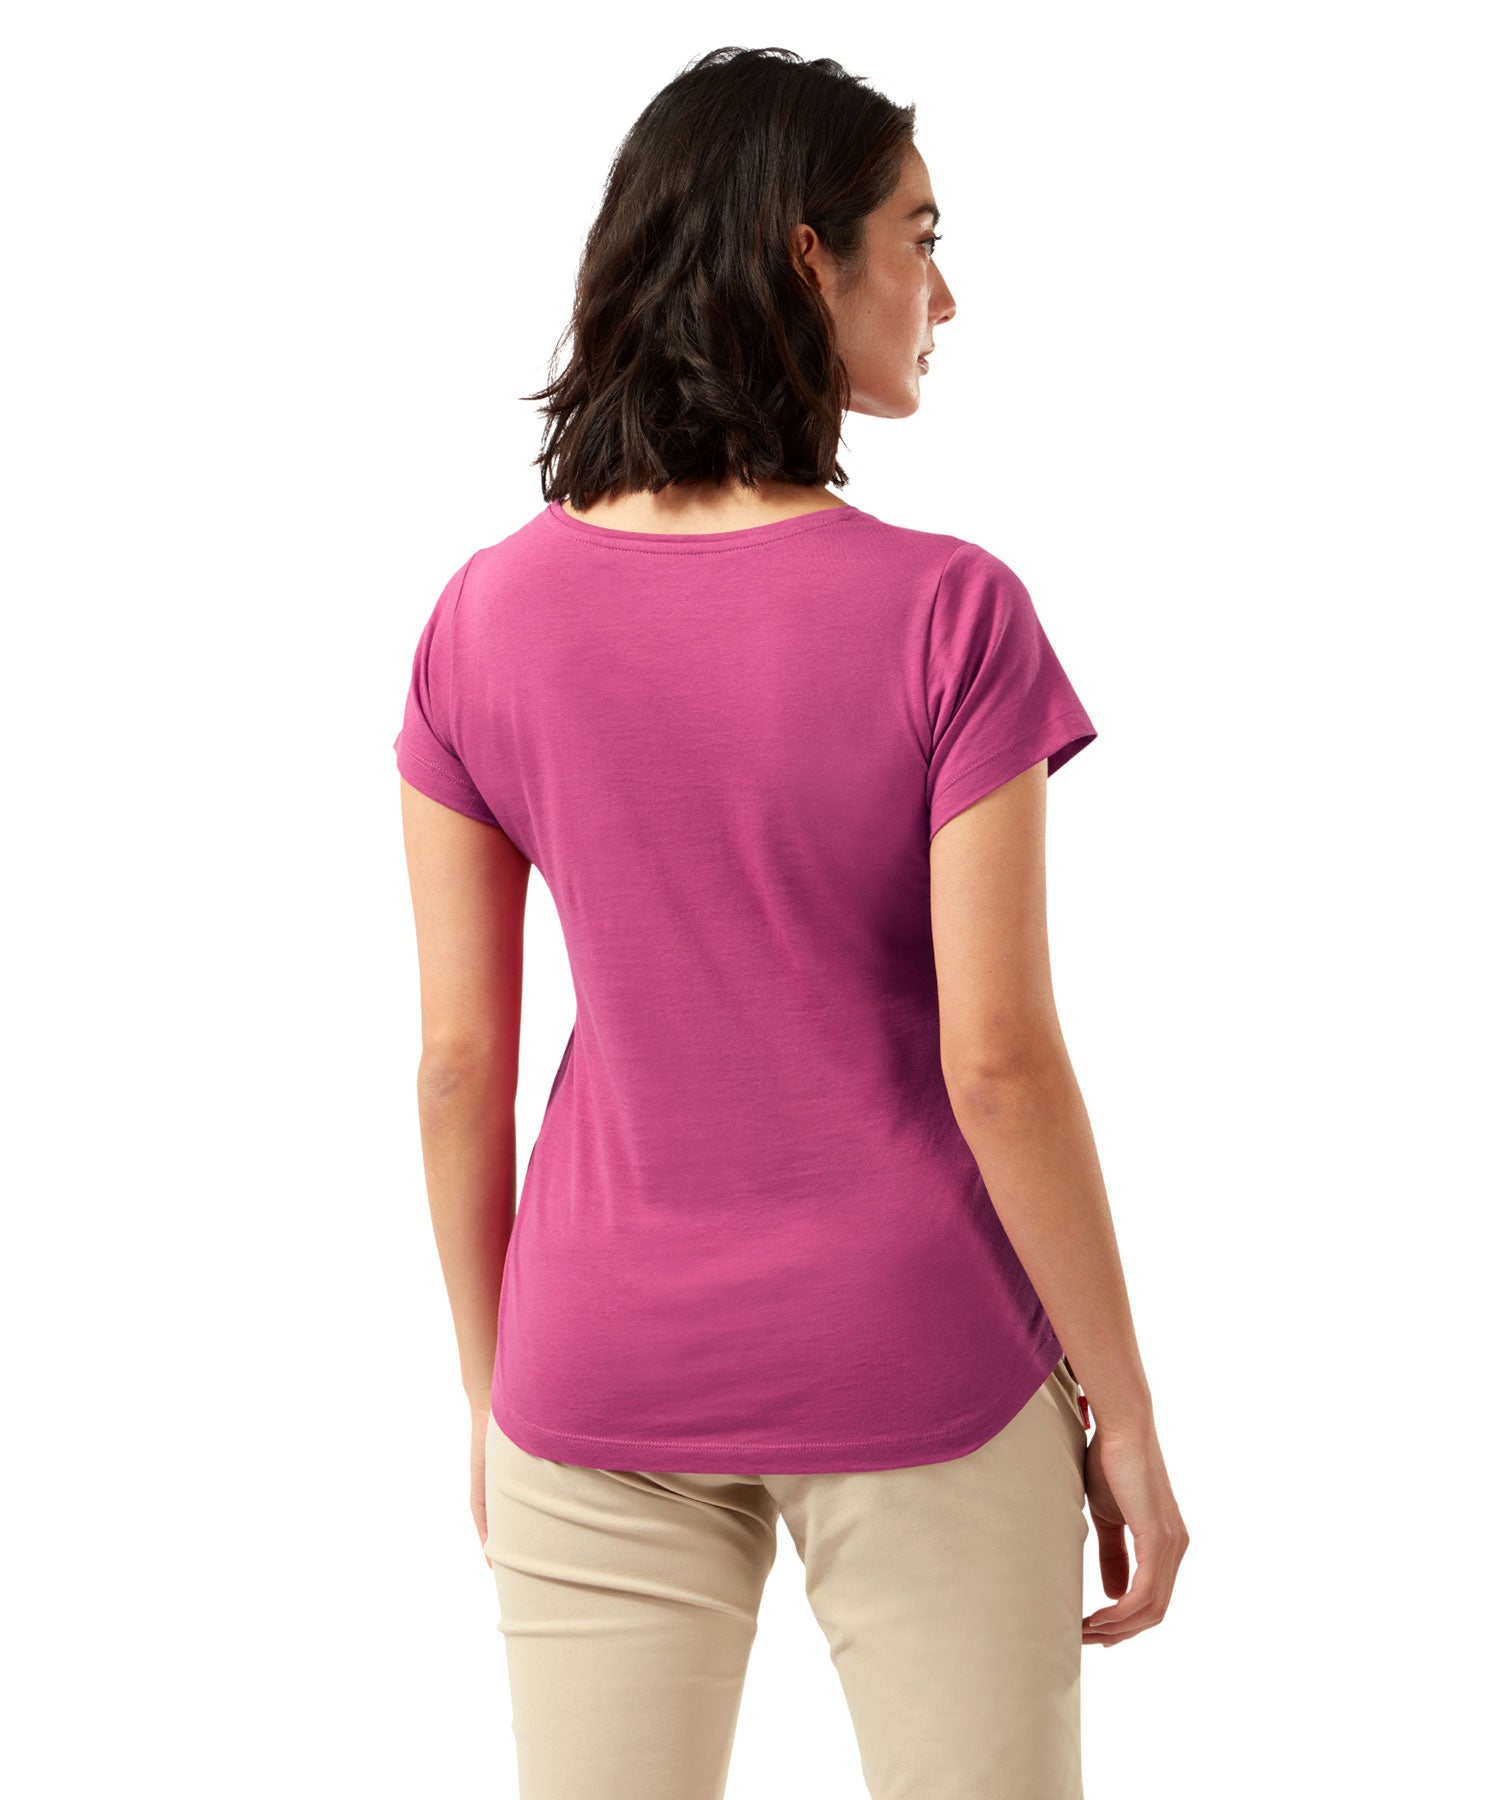 Raspberry Craghoppers Miri Short Sleeve T-Shirt